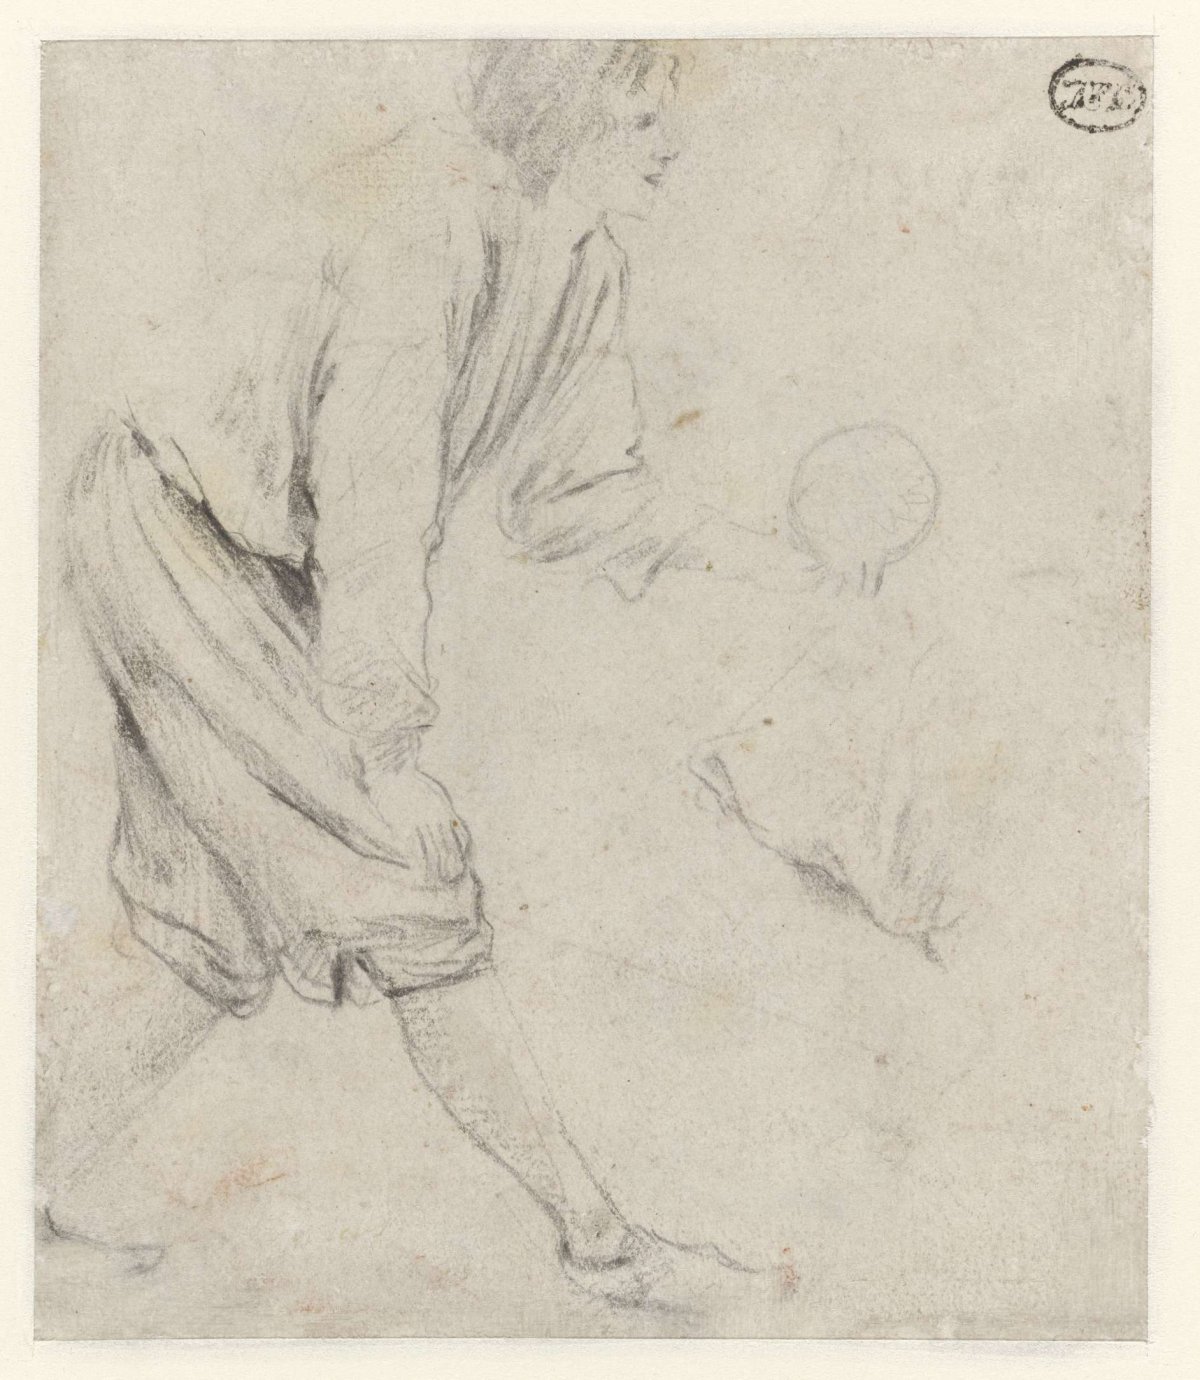 Study of a Man Playing Skittles, Jan Havicksz. Steen, c. 1650 - c. 1655